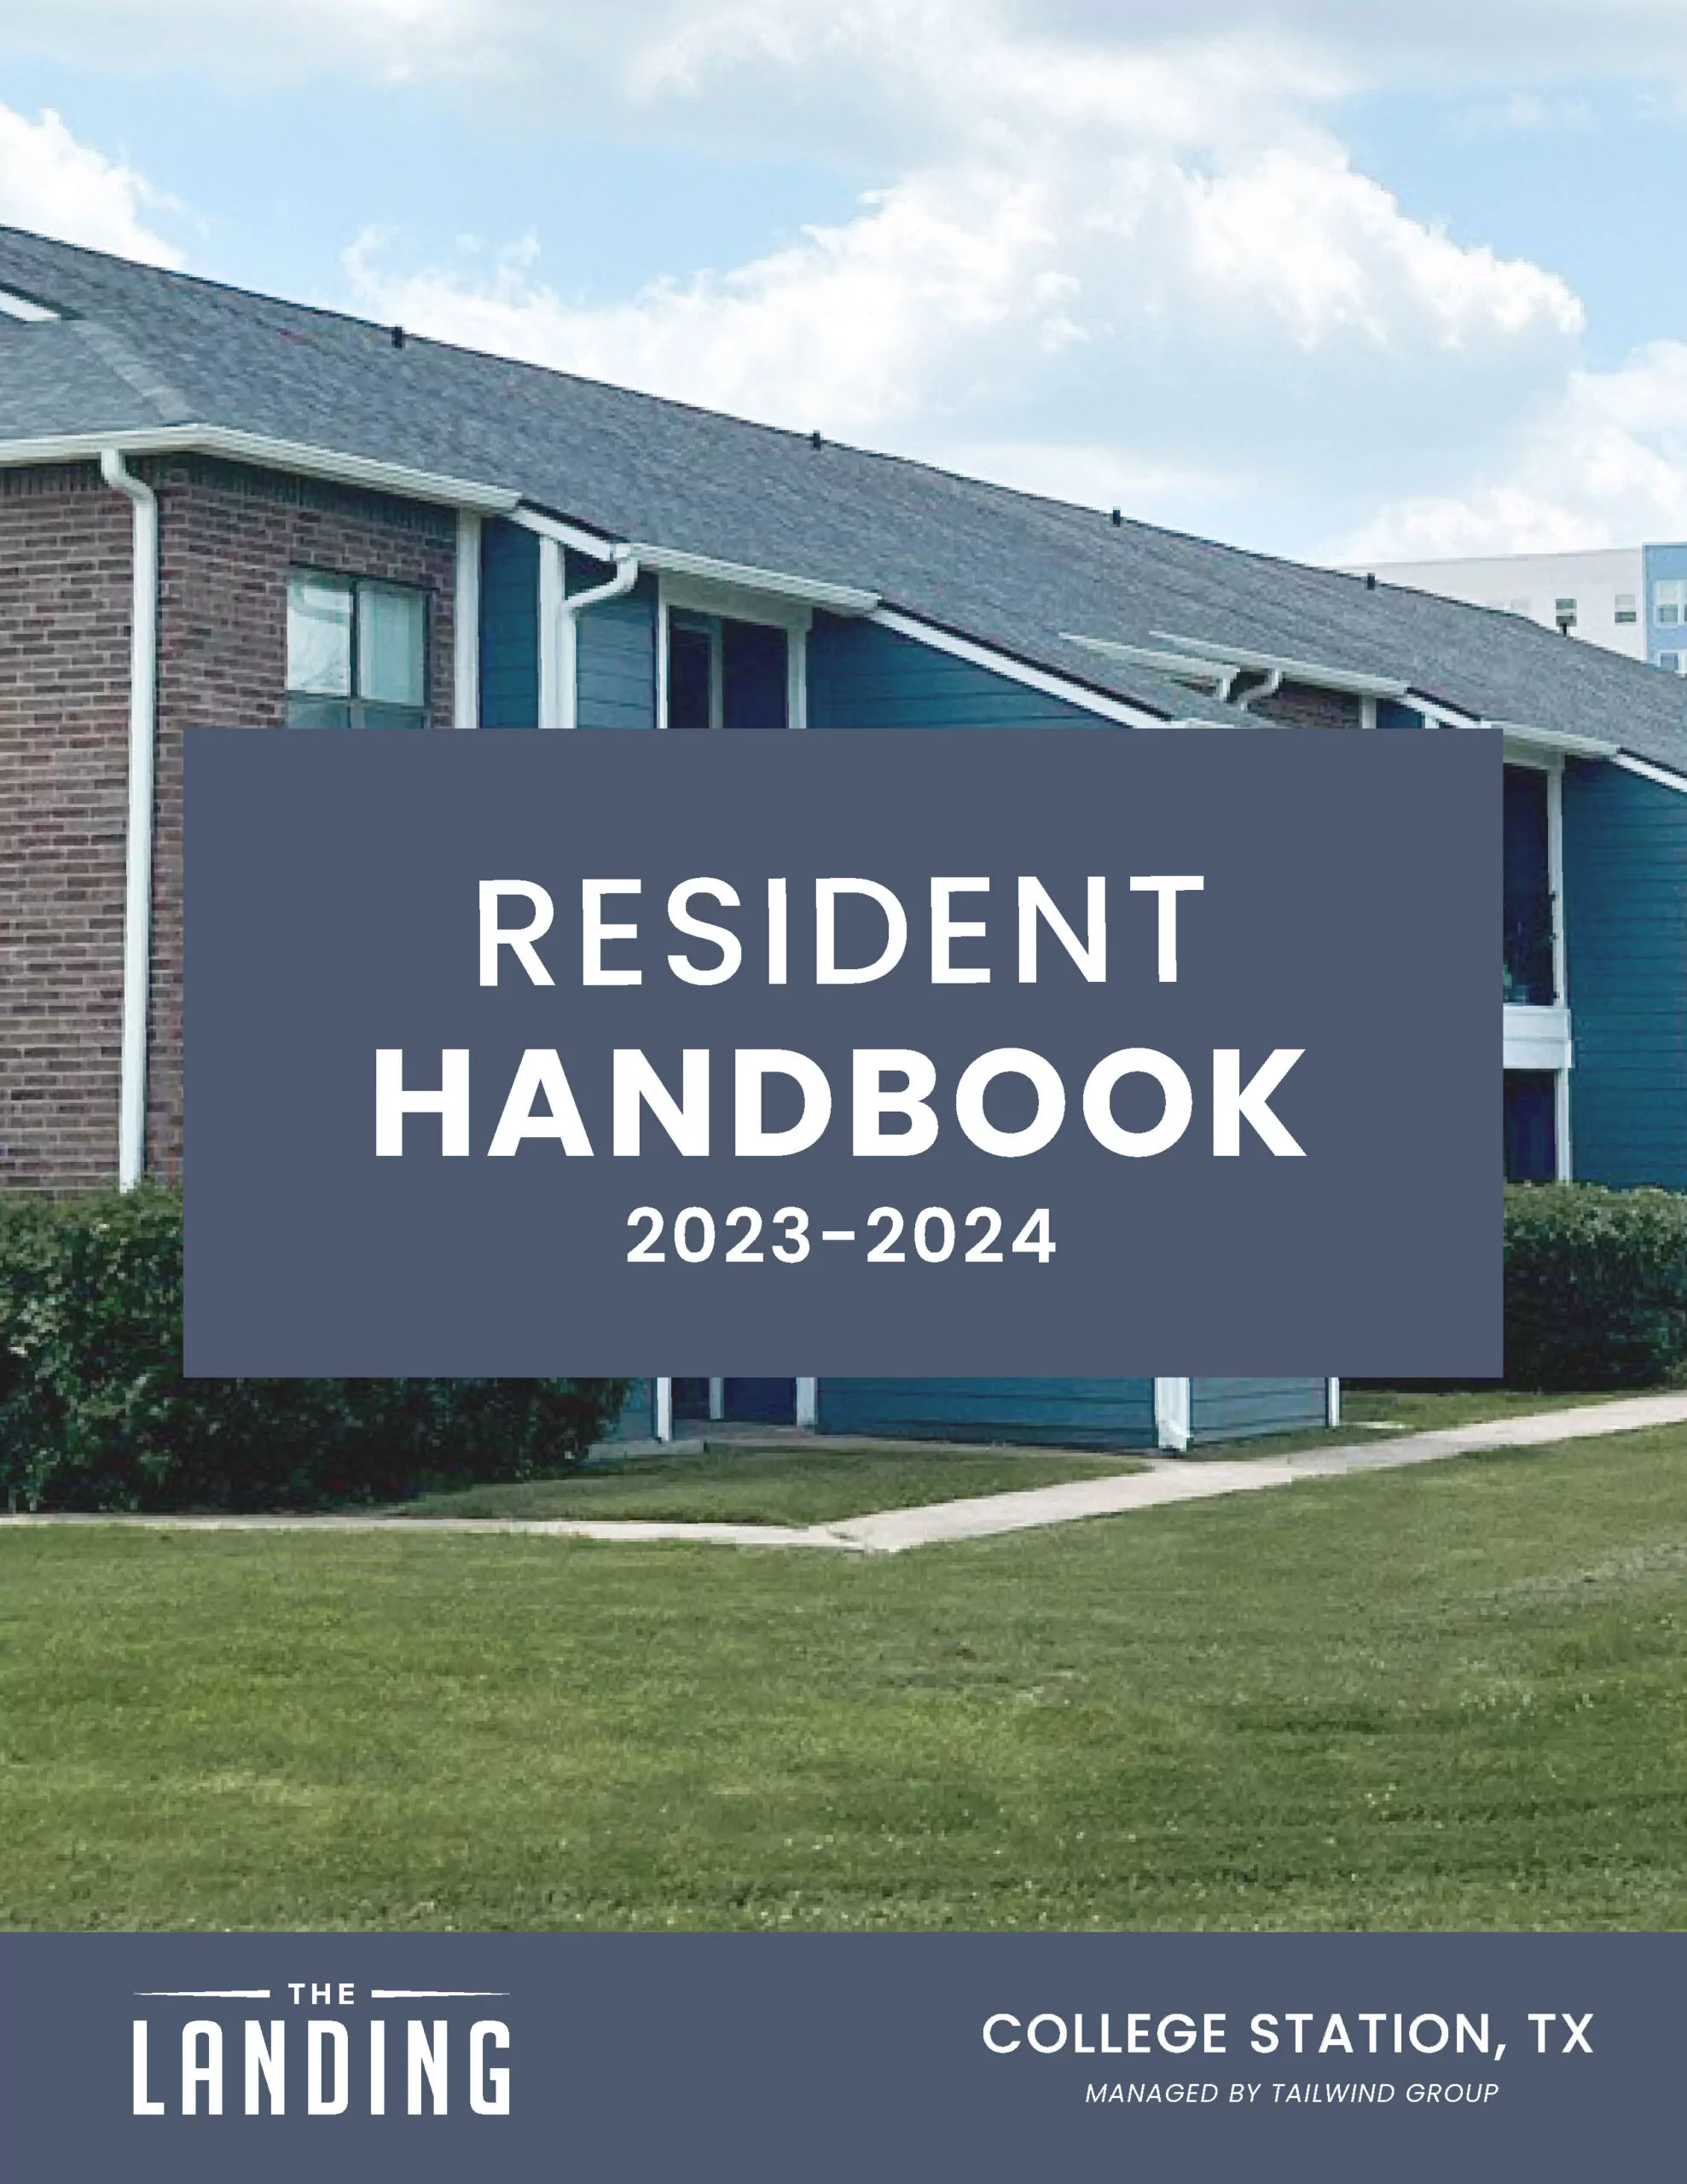 The Landing College Station Resident Handbook